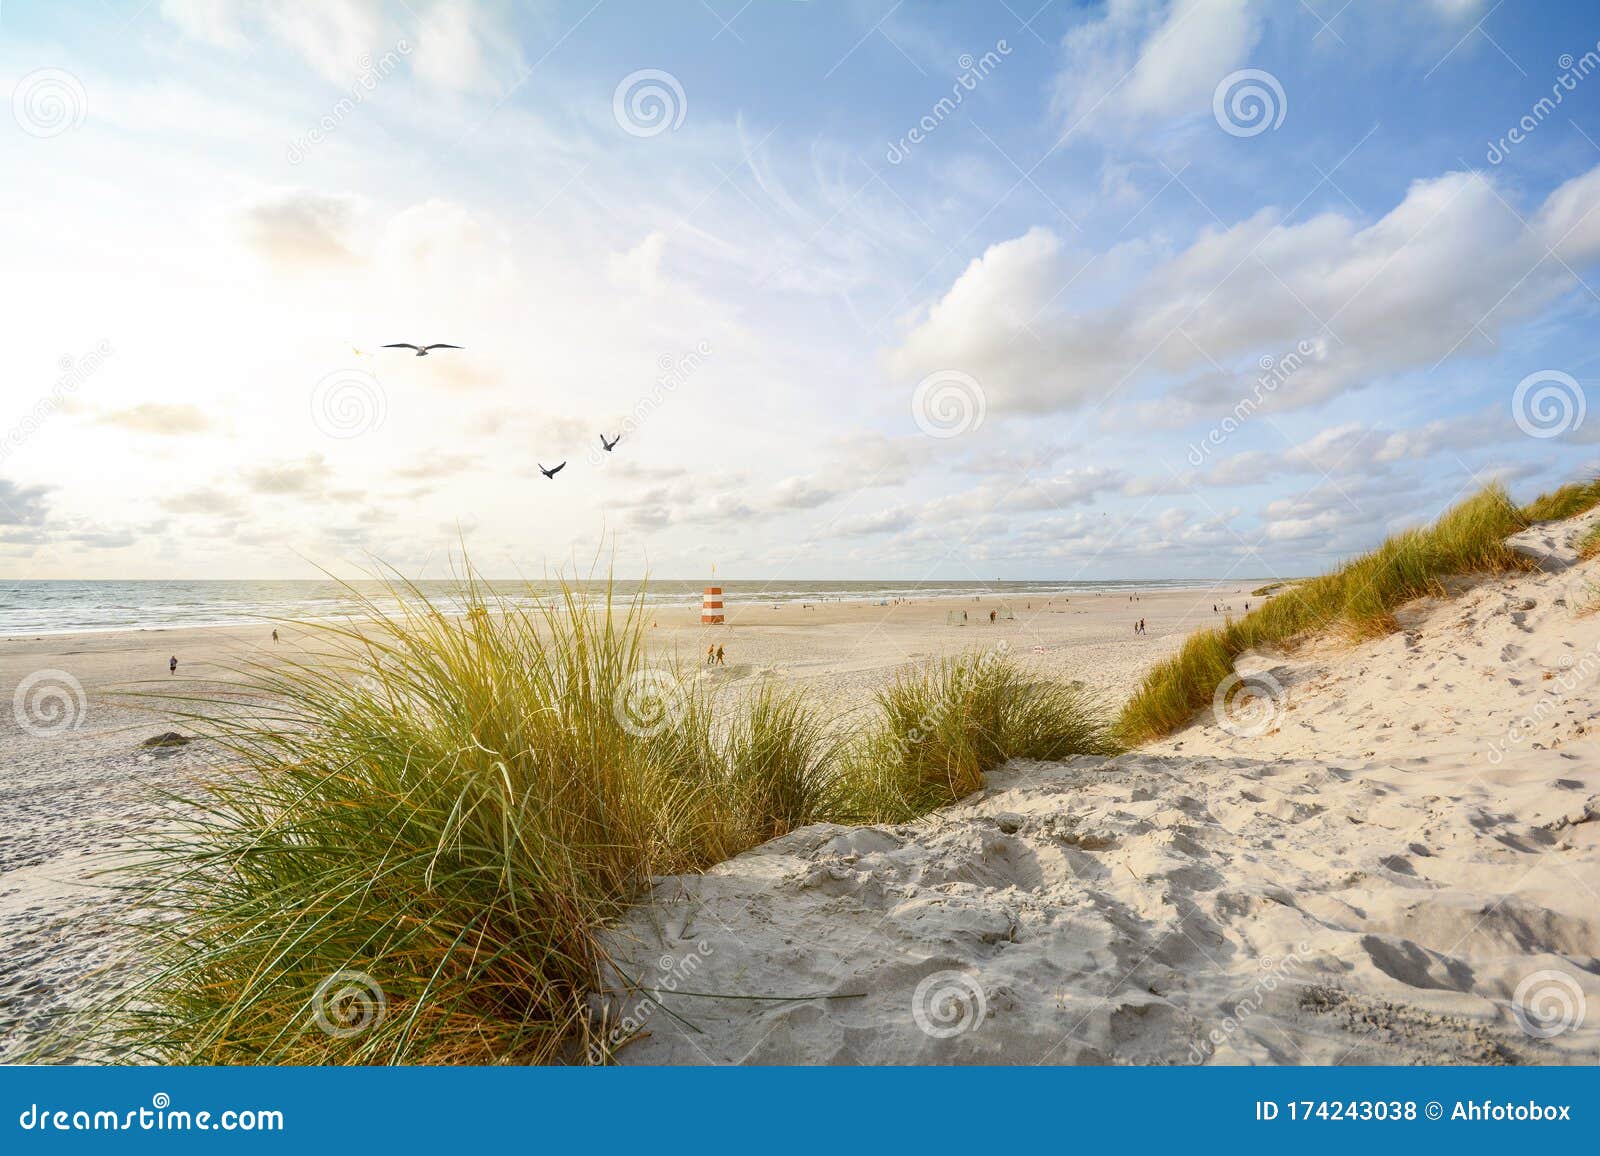 view to beautiful landscape with beach and sand dunes near henne strand, north sea coast landscape jutland denmark